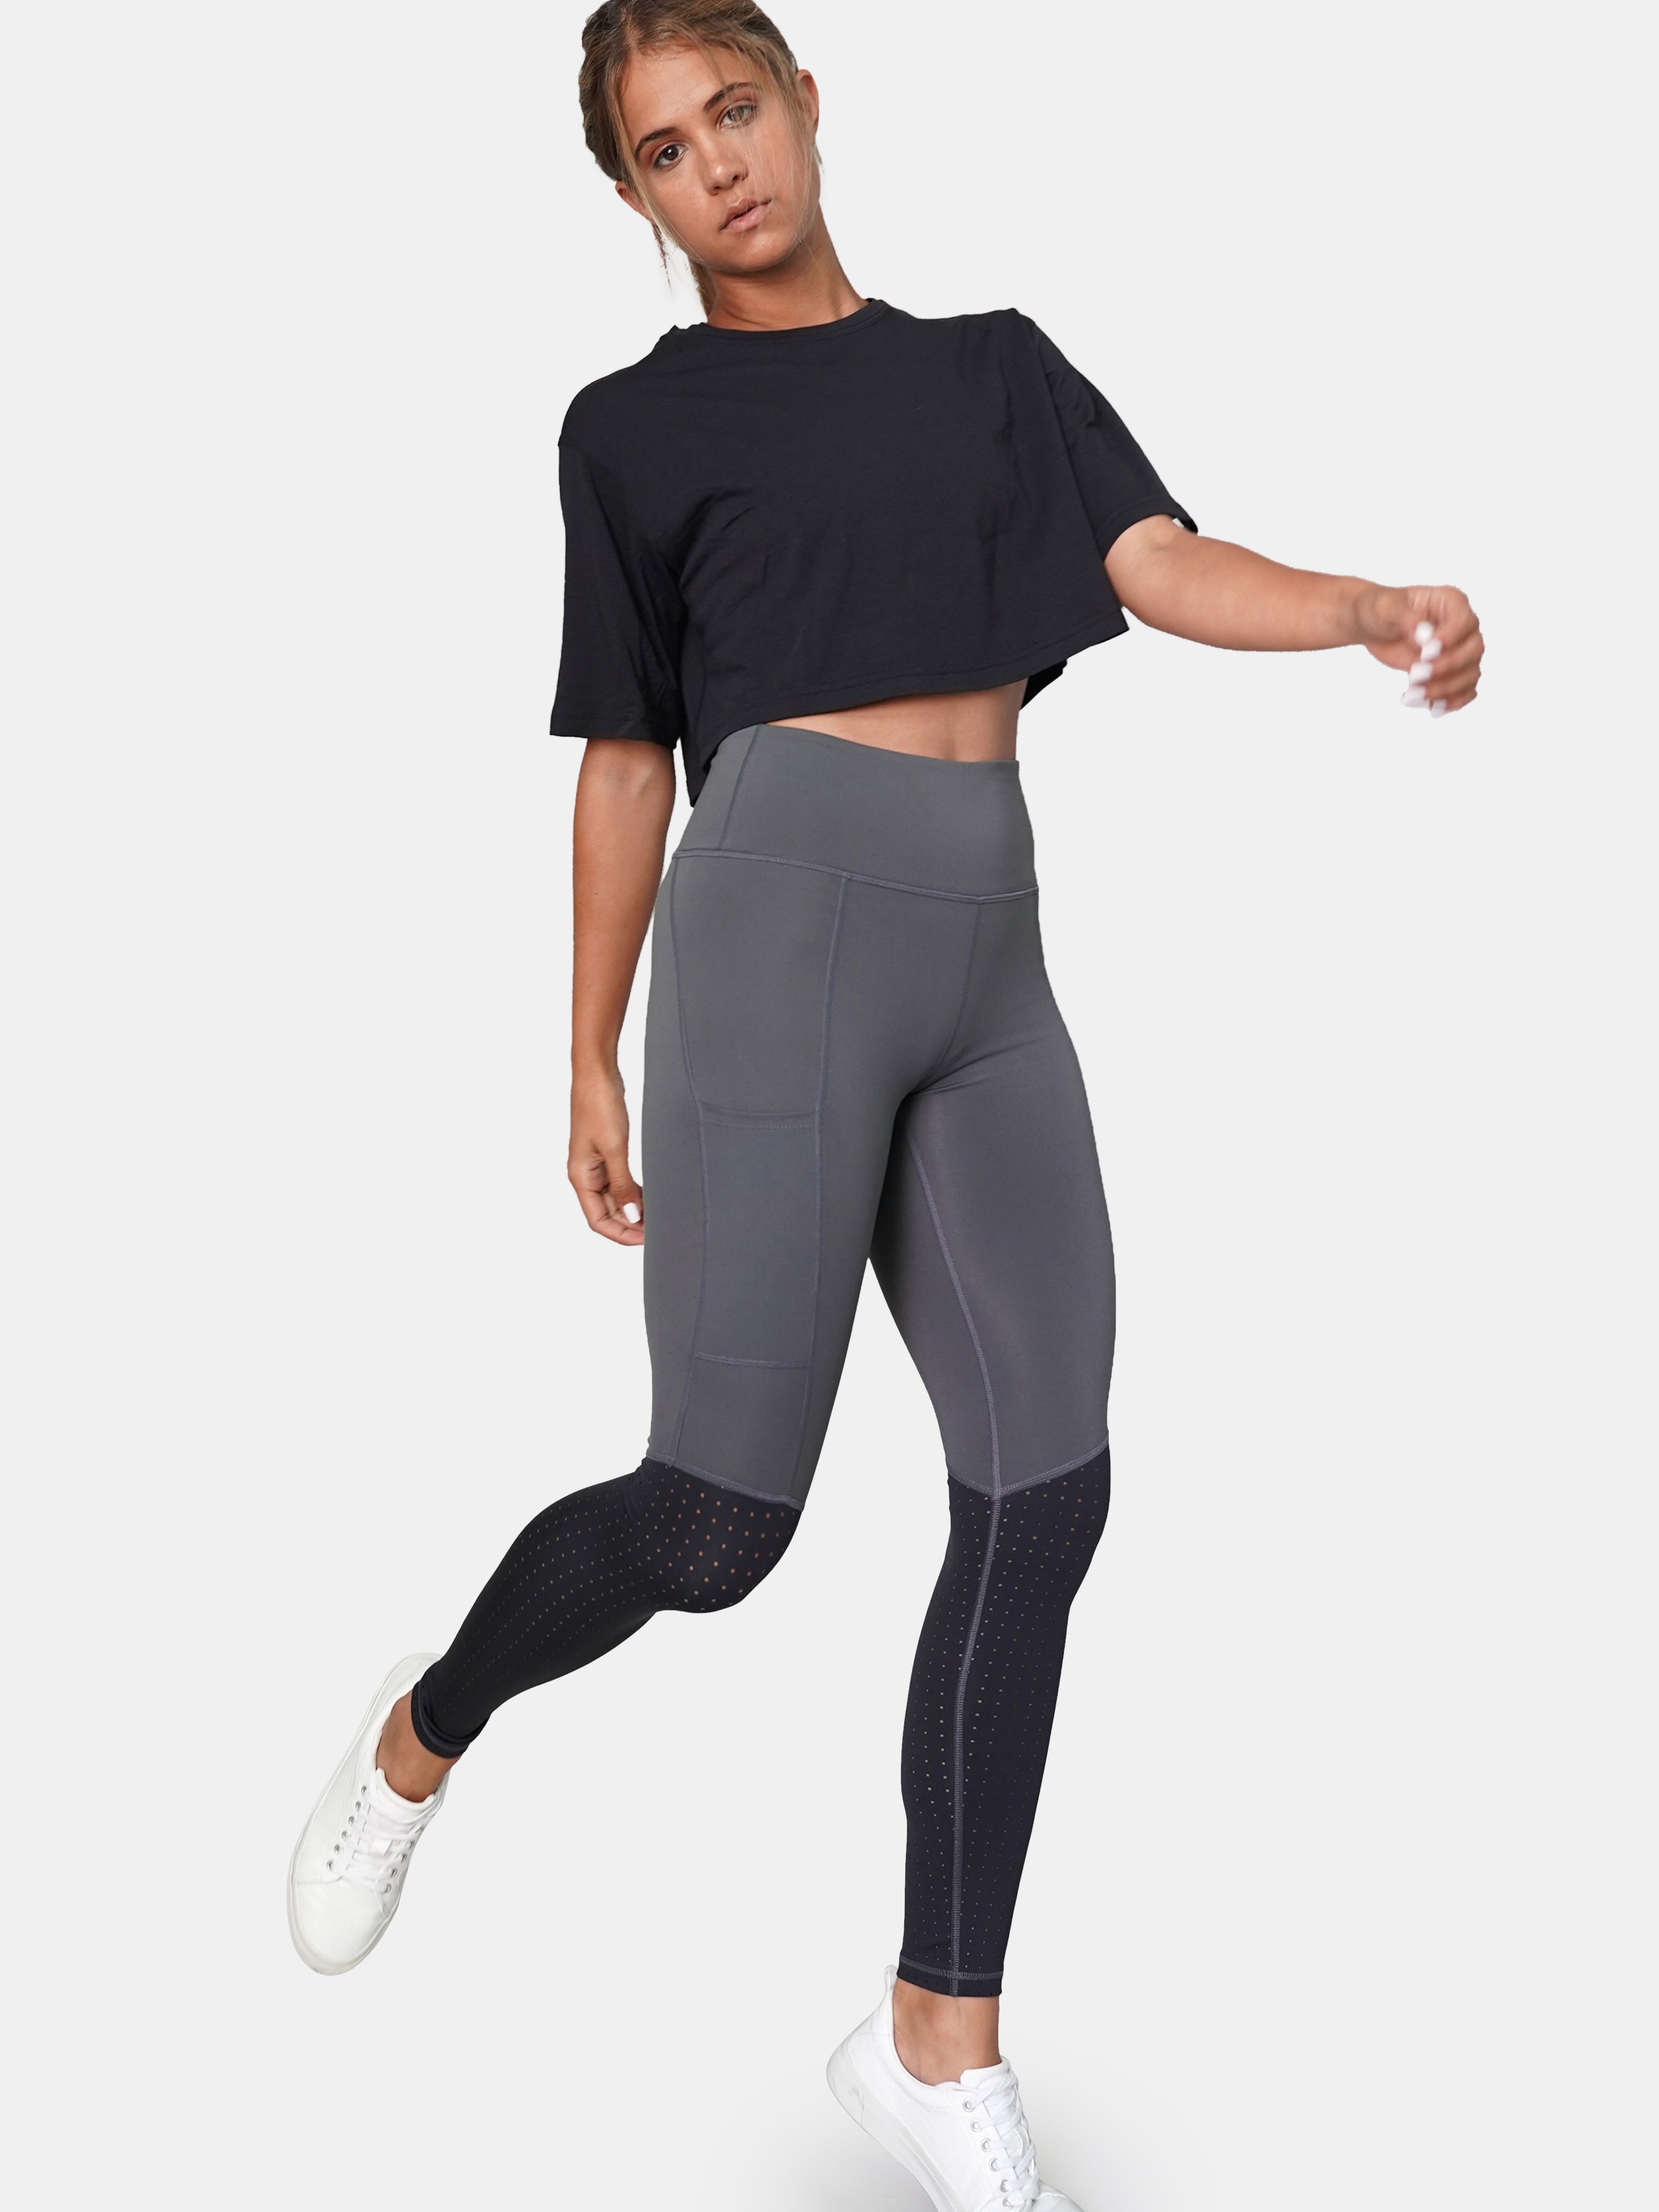 Alana Athletica The Dash Side Pocket Legging In Gray/black Laser Cut